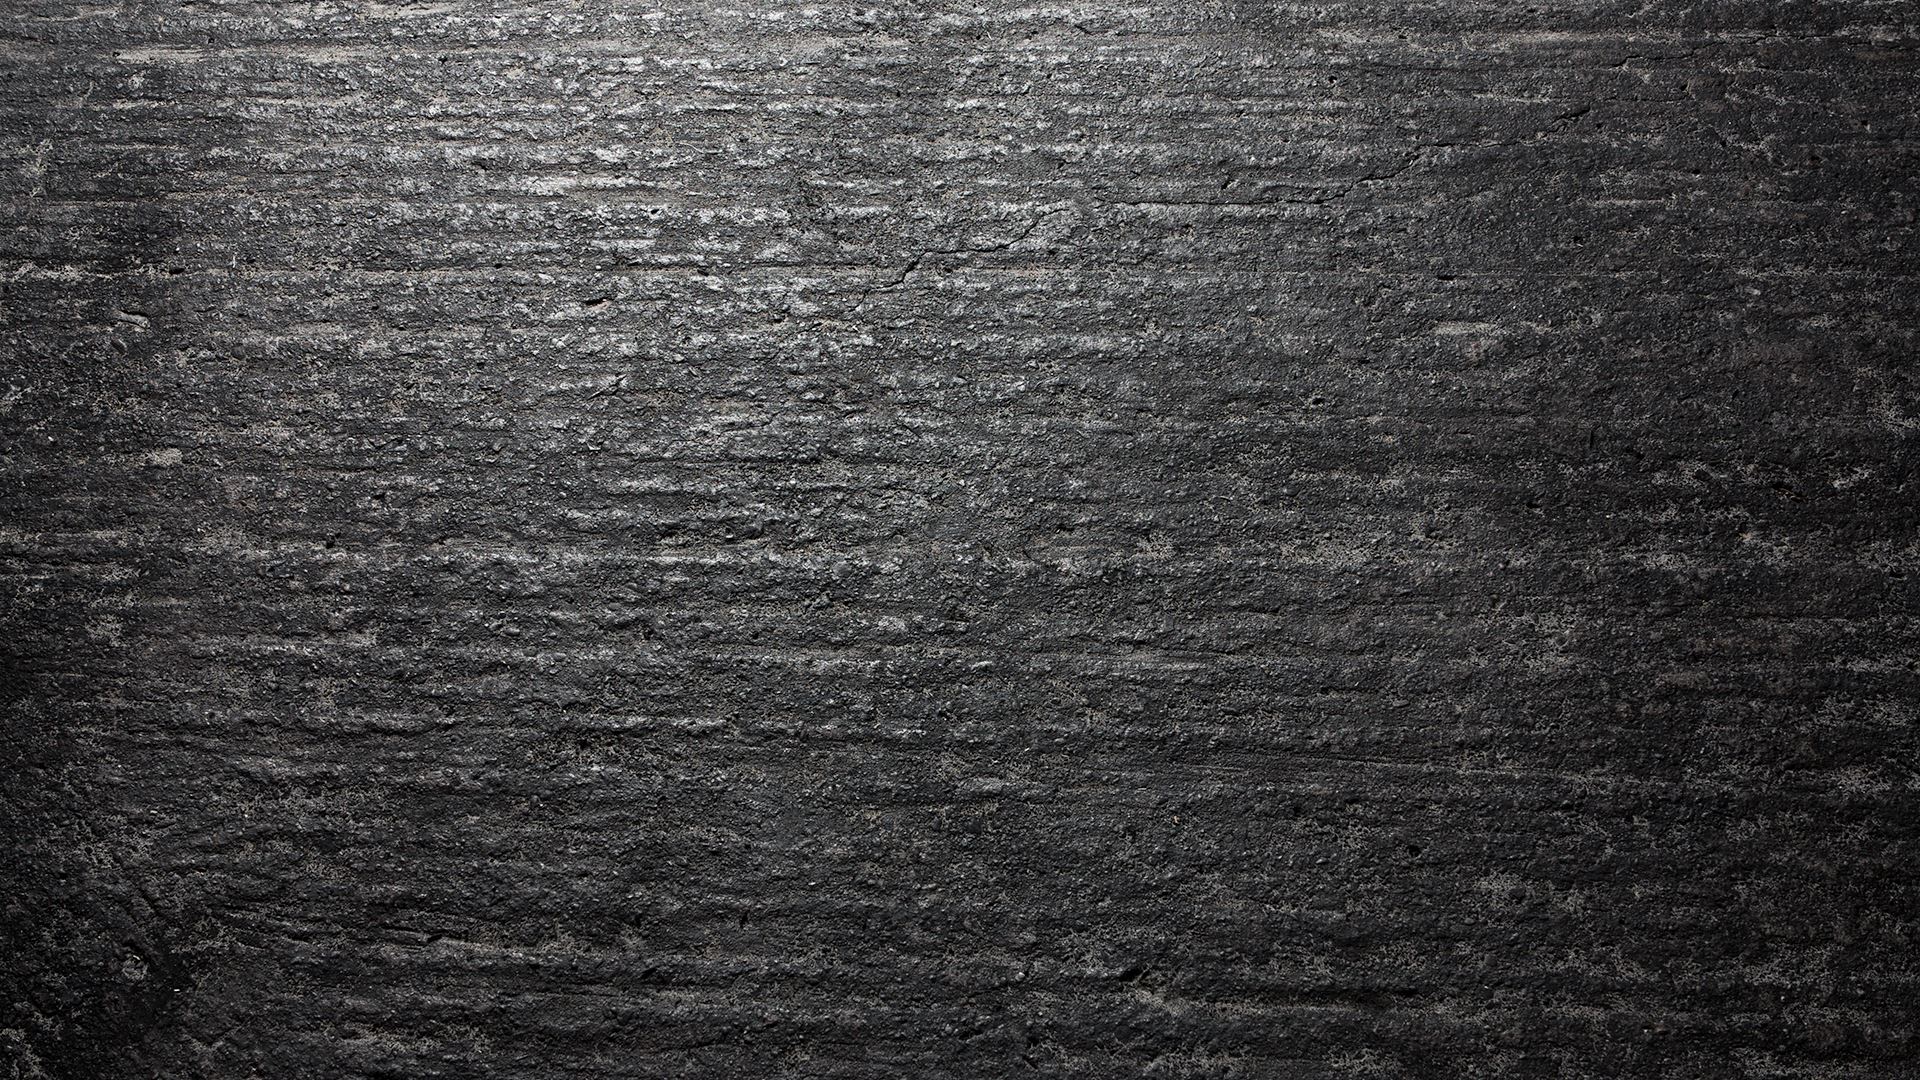 black-grunge-concrete-texture-hd.jpg  by Craig Smith